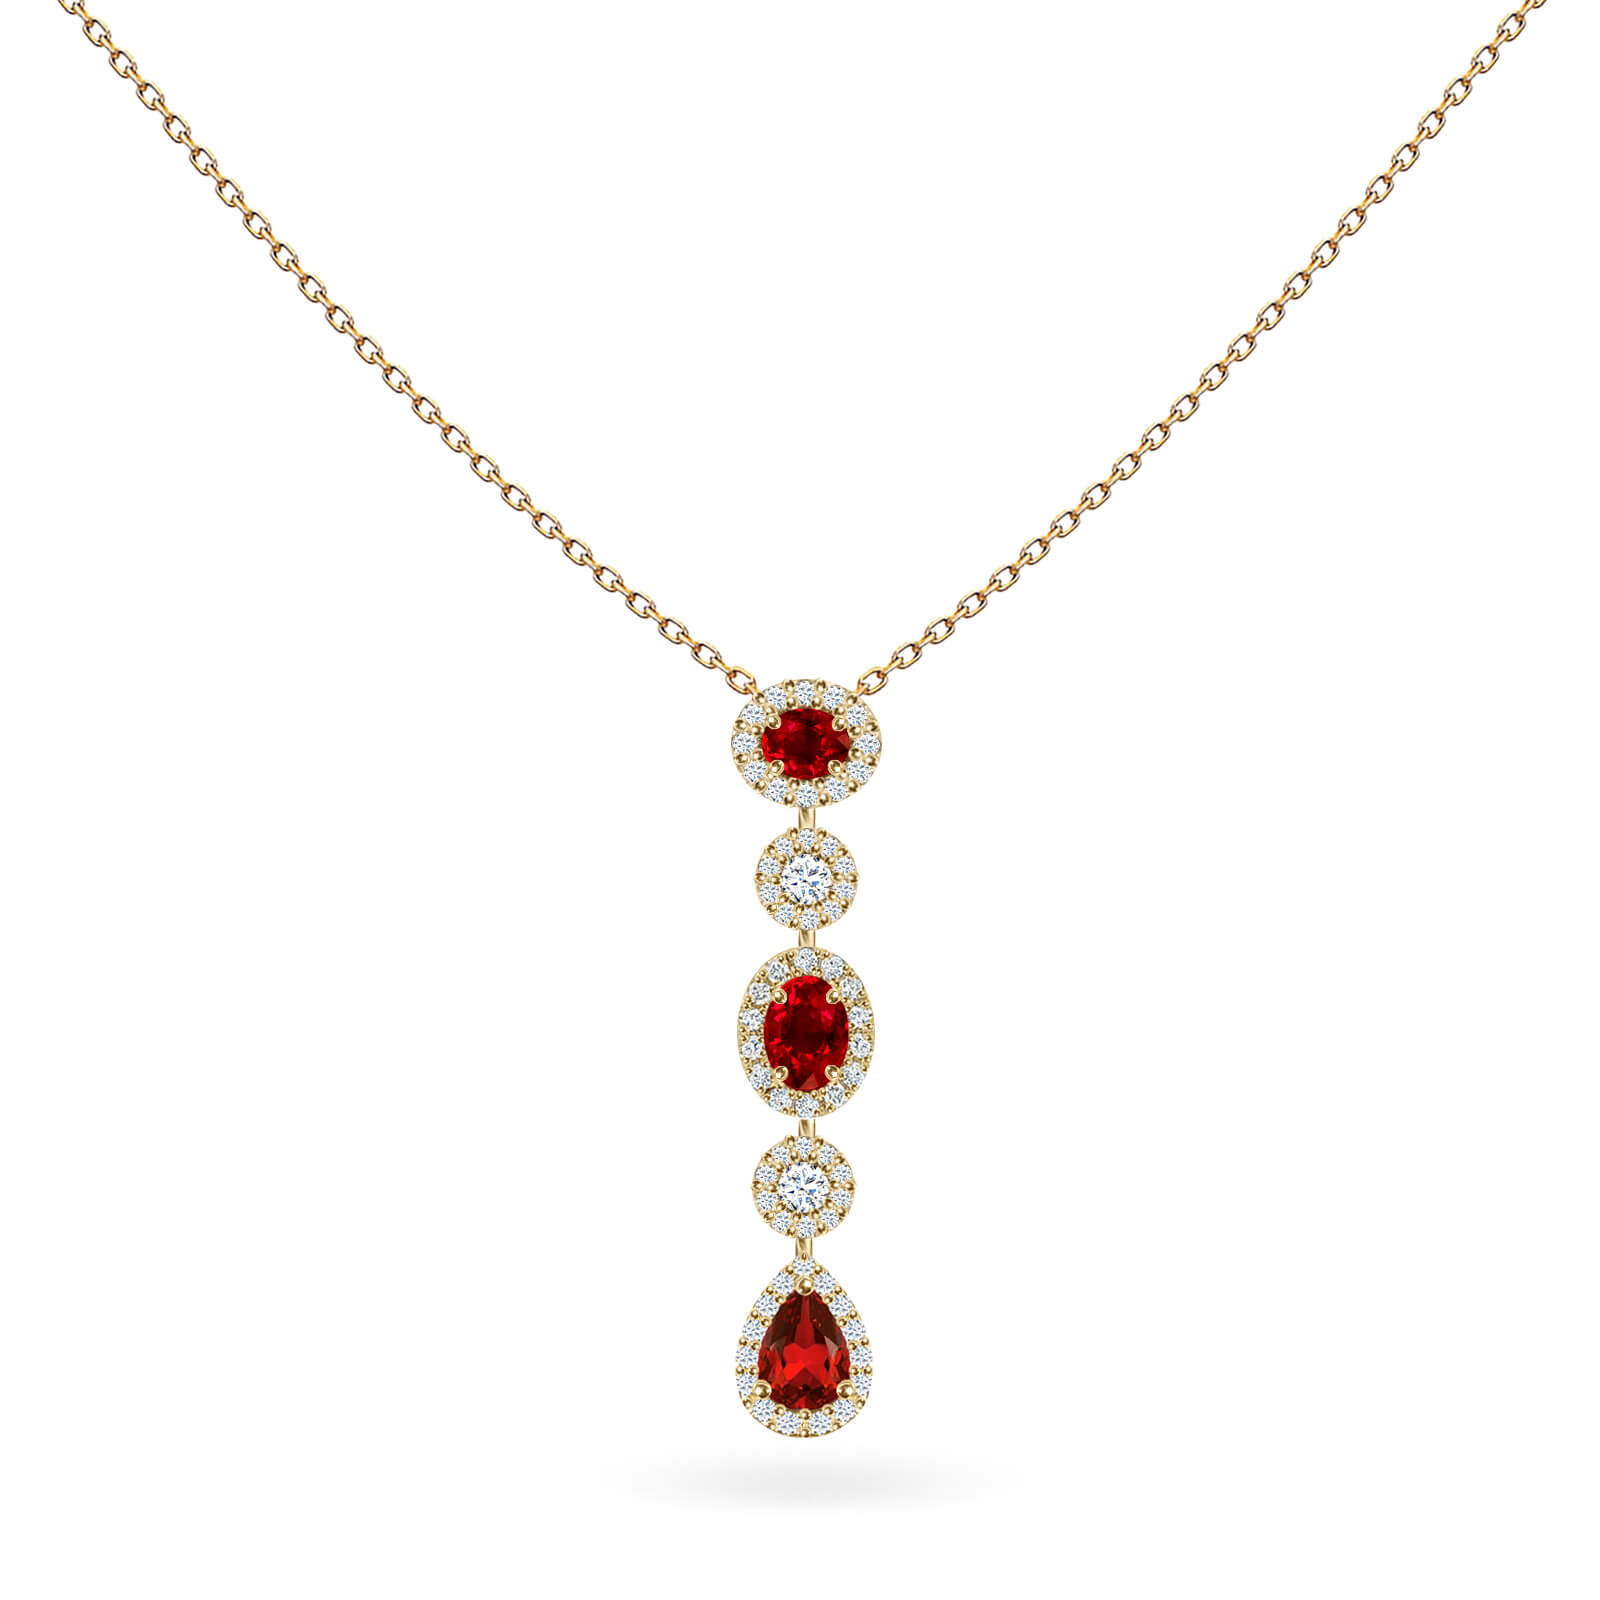 Necklace Merveille Precious Stone, 18K Gold and Diamonds - Ruby ...